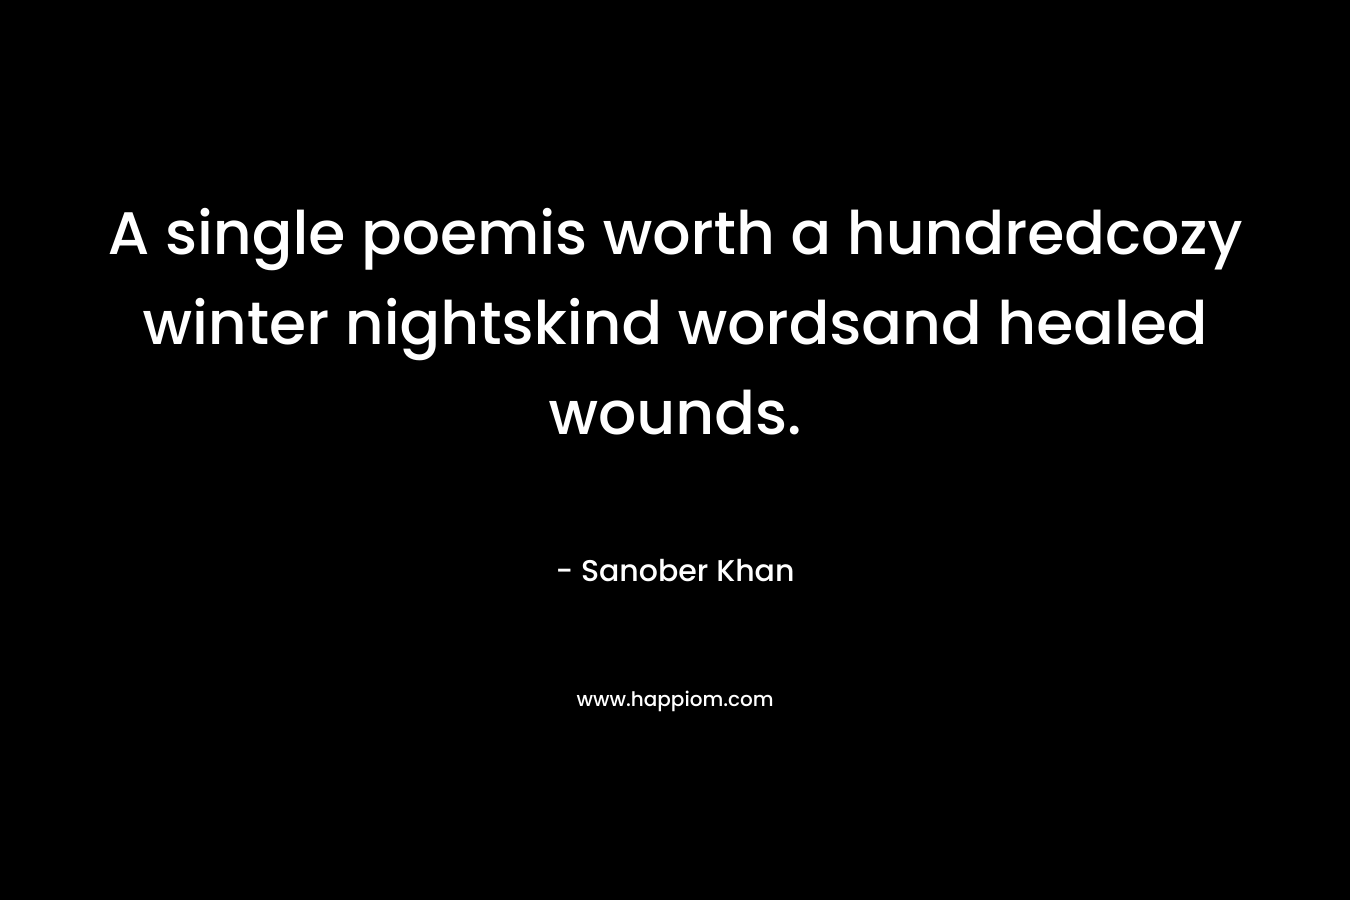 A single poemis worth a hundredcozy winter nightskind wordsand healed wounds.